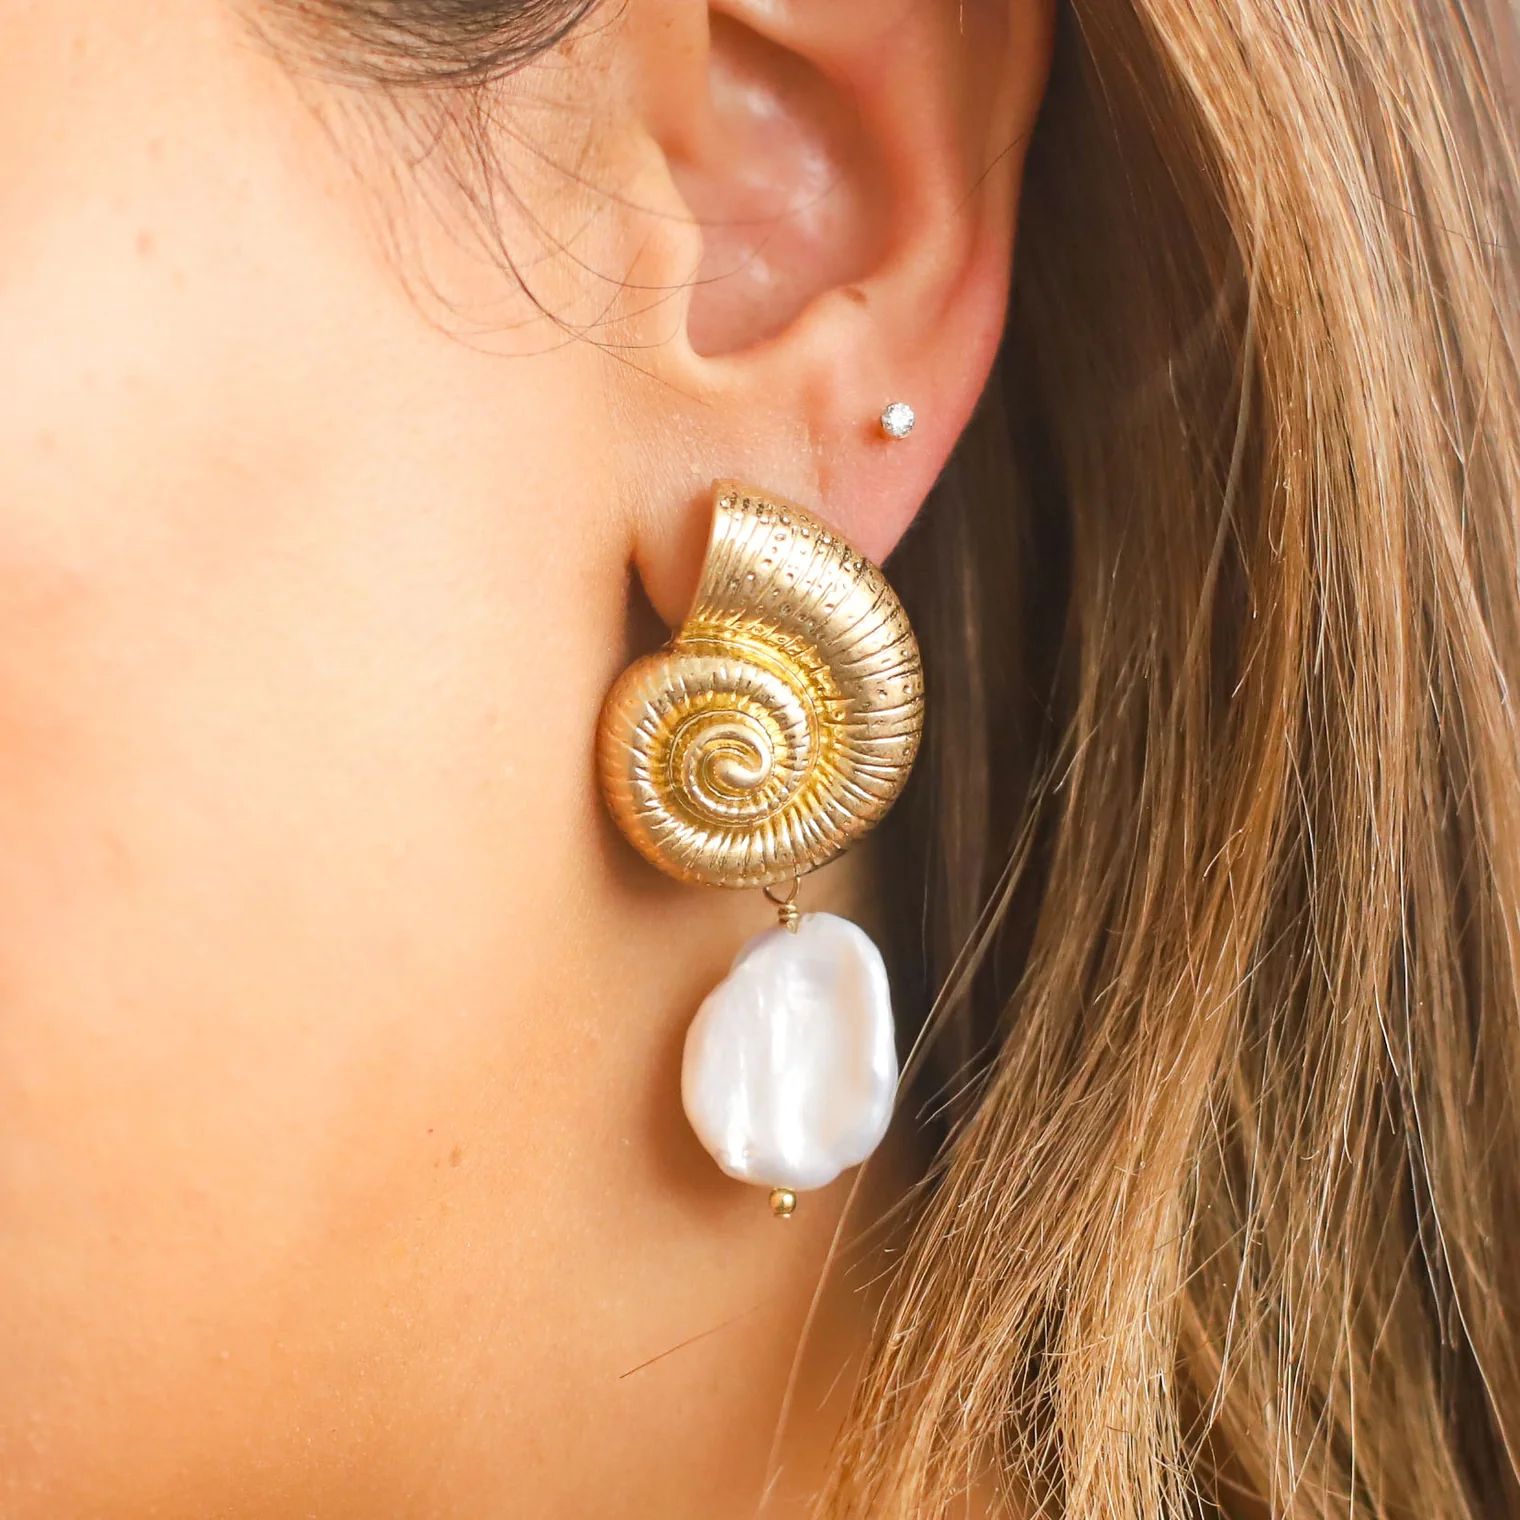 Summer Abroad Earrings by Kelly Saks | Taudrey